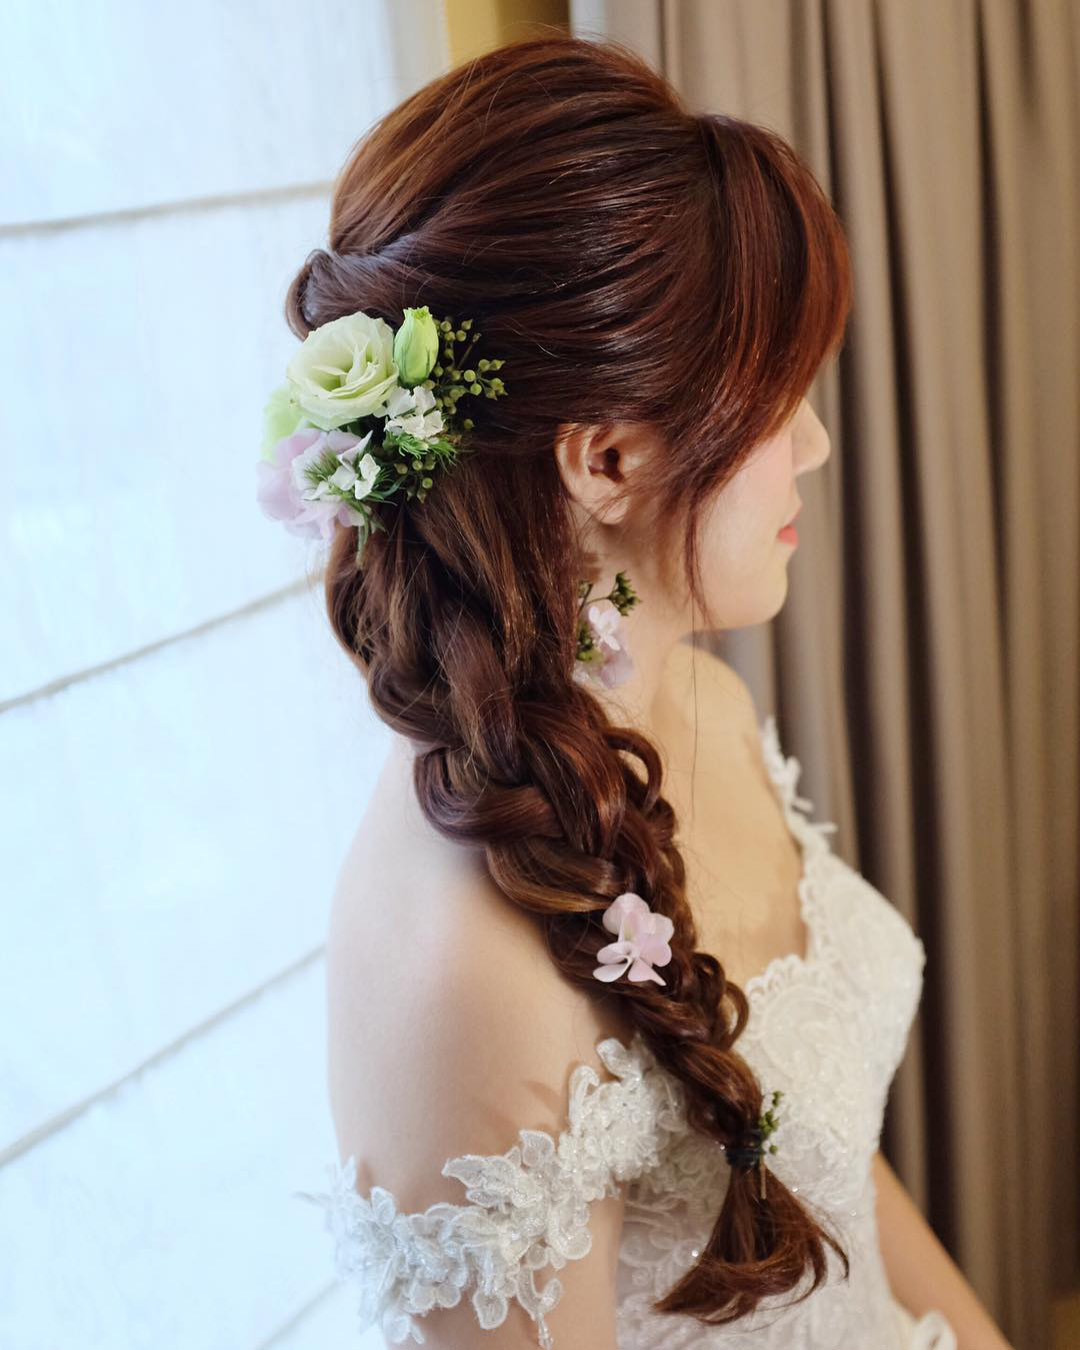 bridal hair pins flowers long braid one side christinechiamakeup